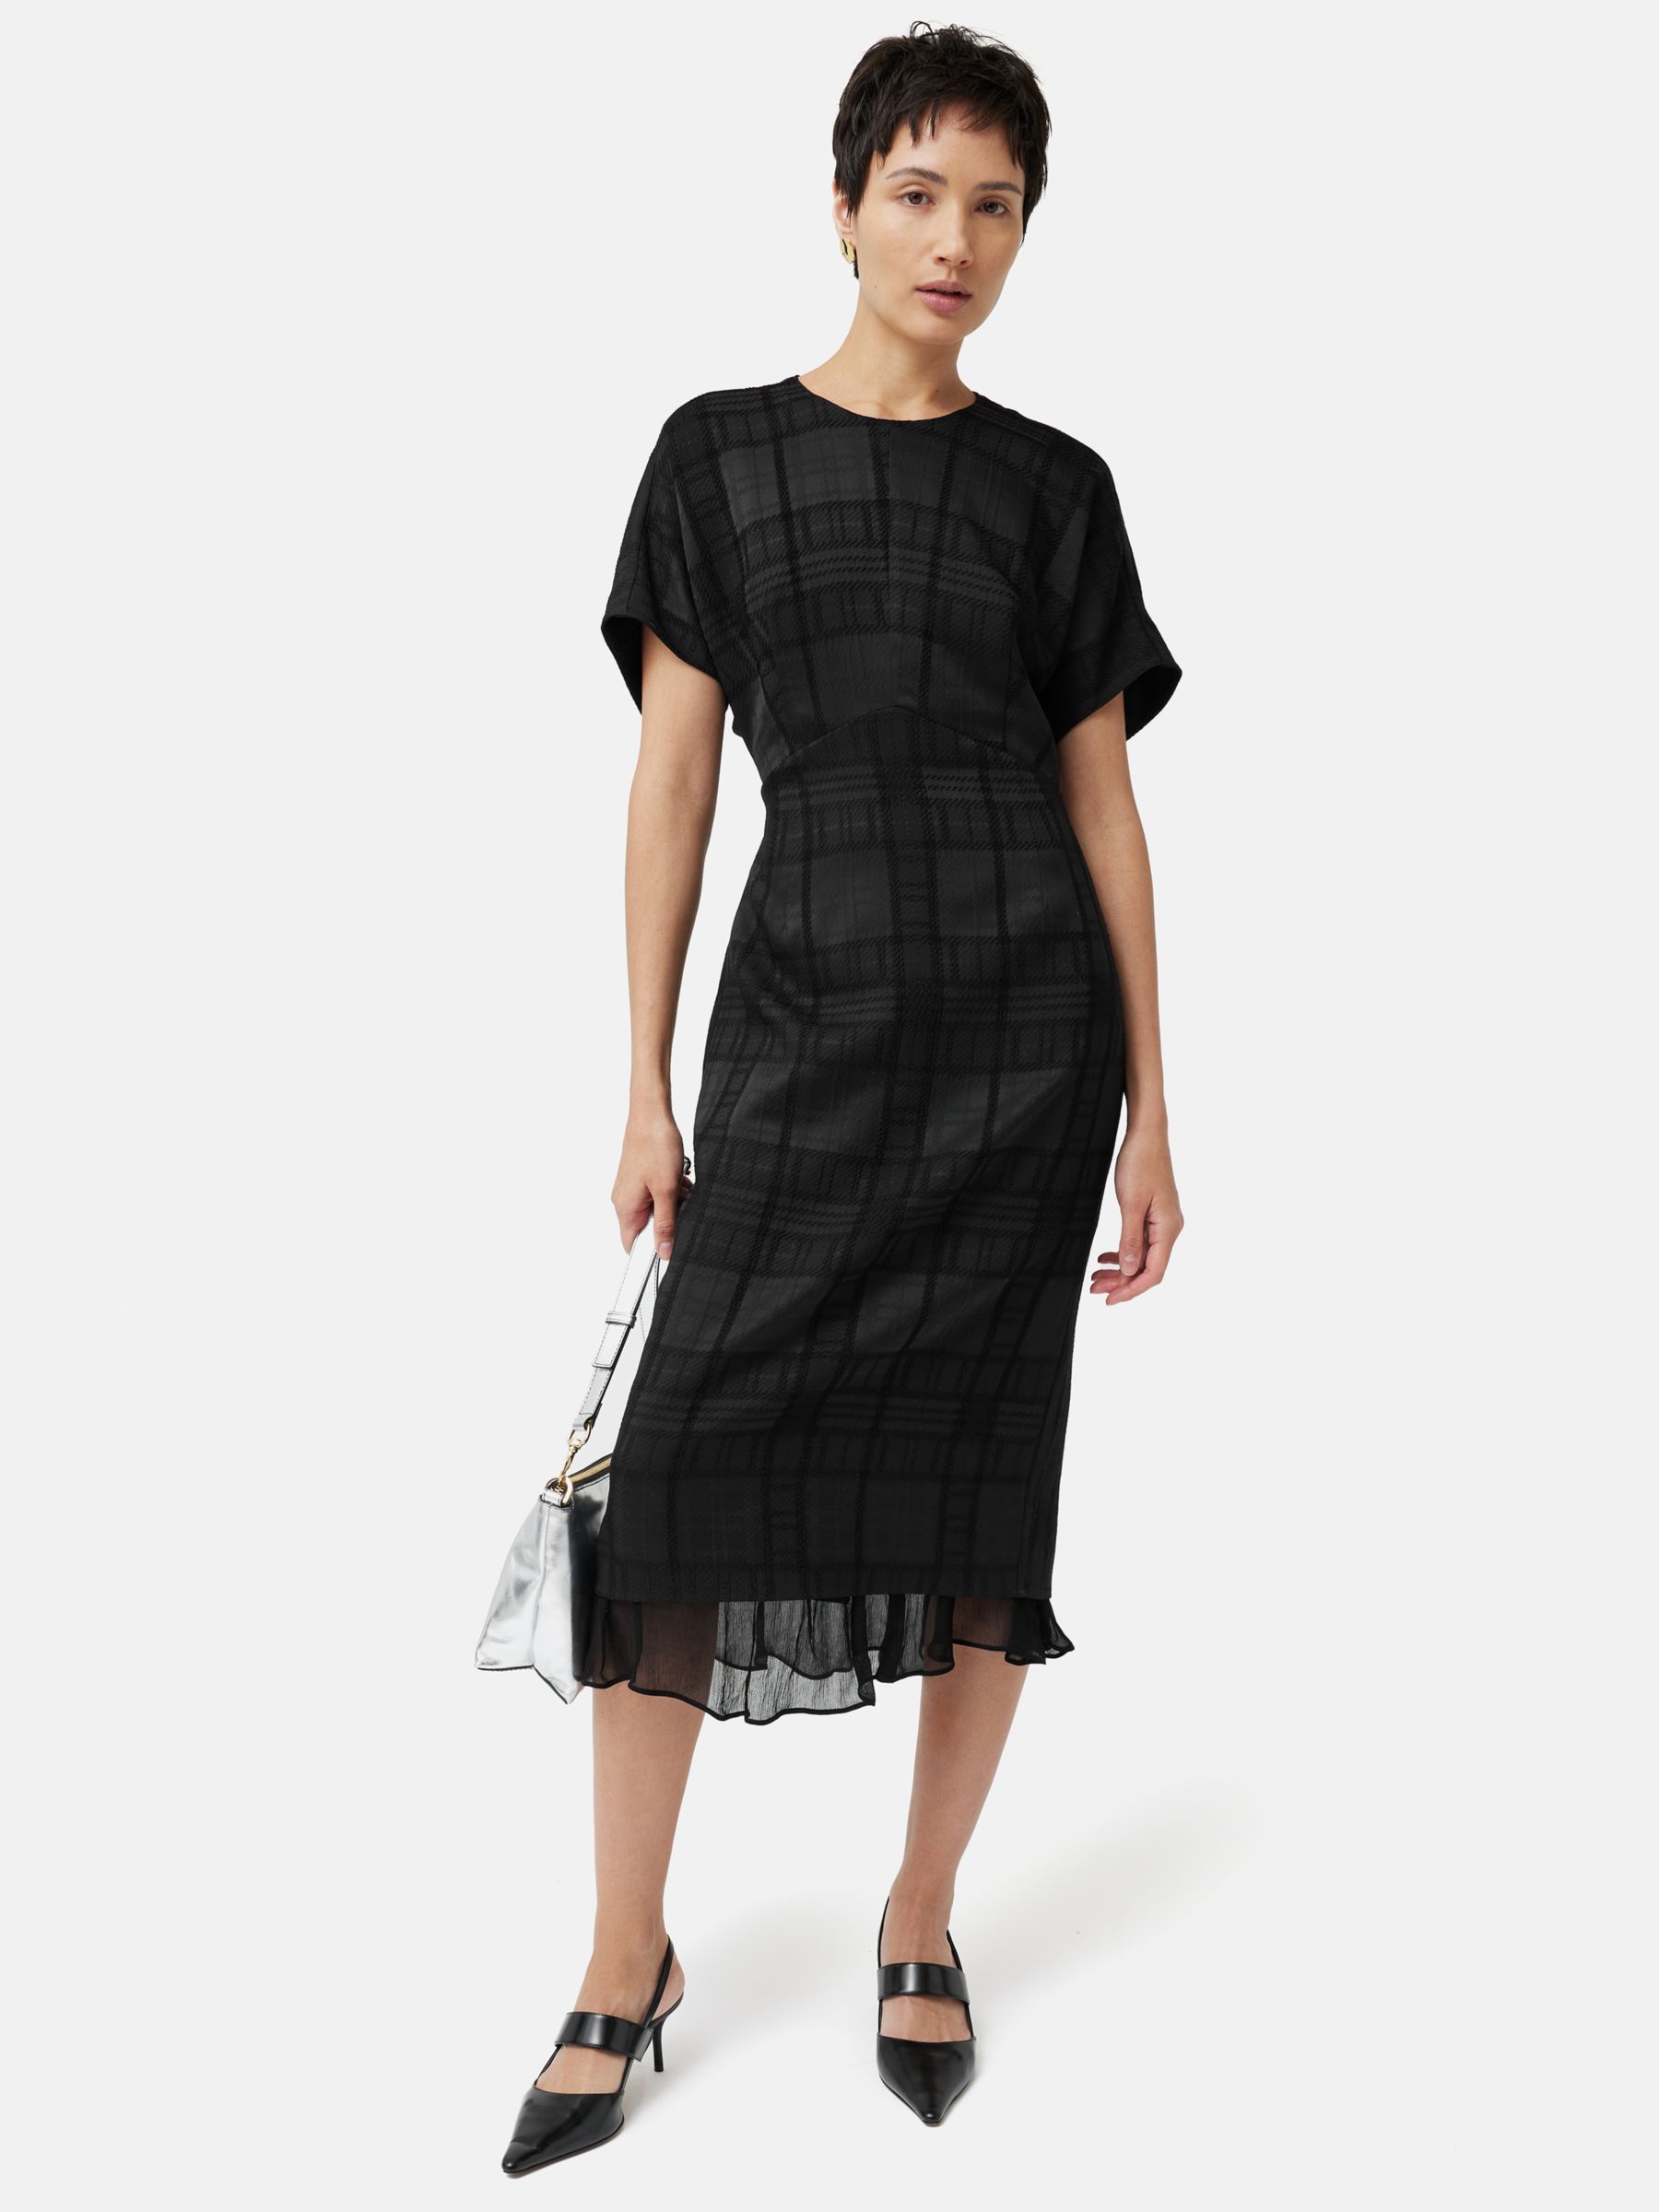 Xersion Sleeveless Built in Bra Midi Tennis Dress, Color: Black